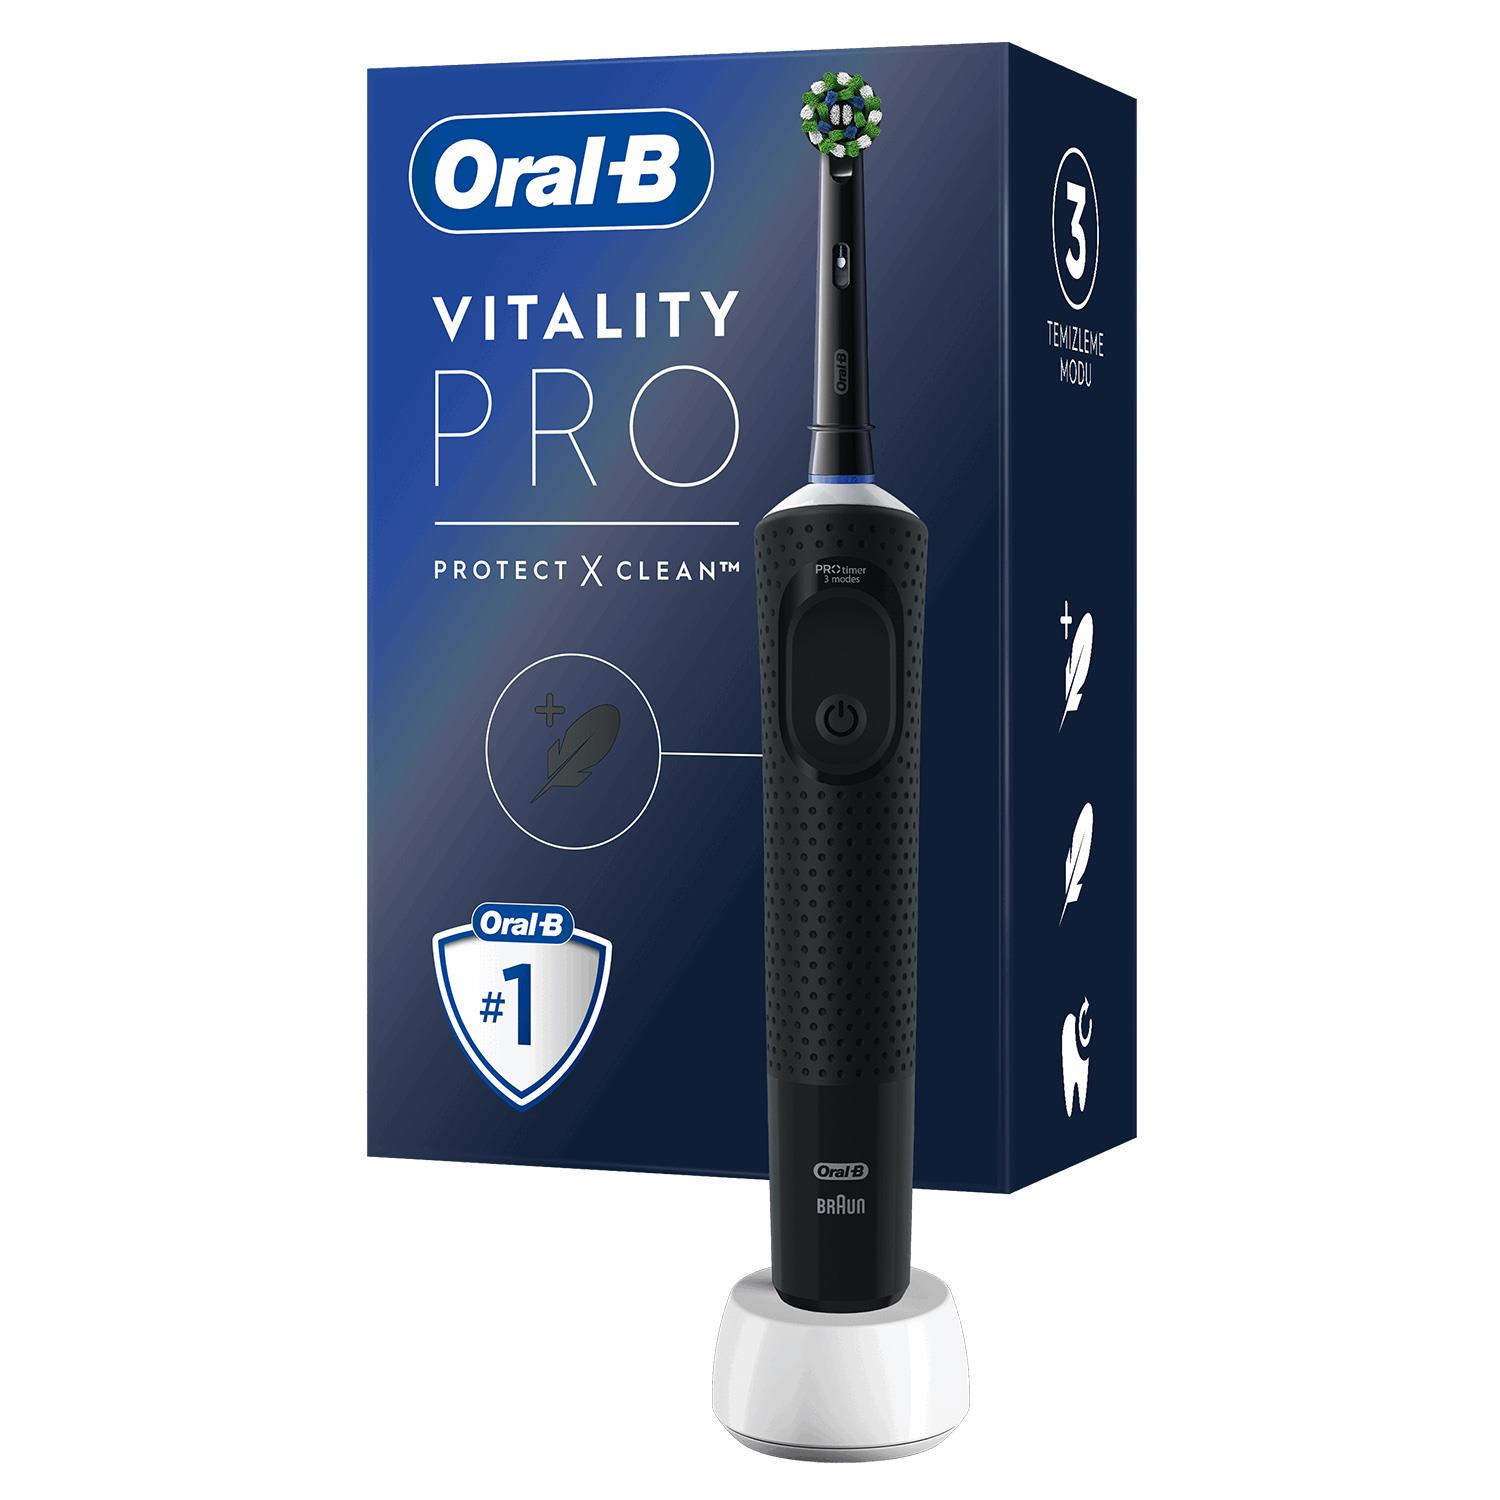 Oral-B D103 Vitality Pro Cross Action Şarjlı Diş Fırçası - Siyah